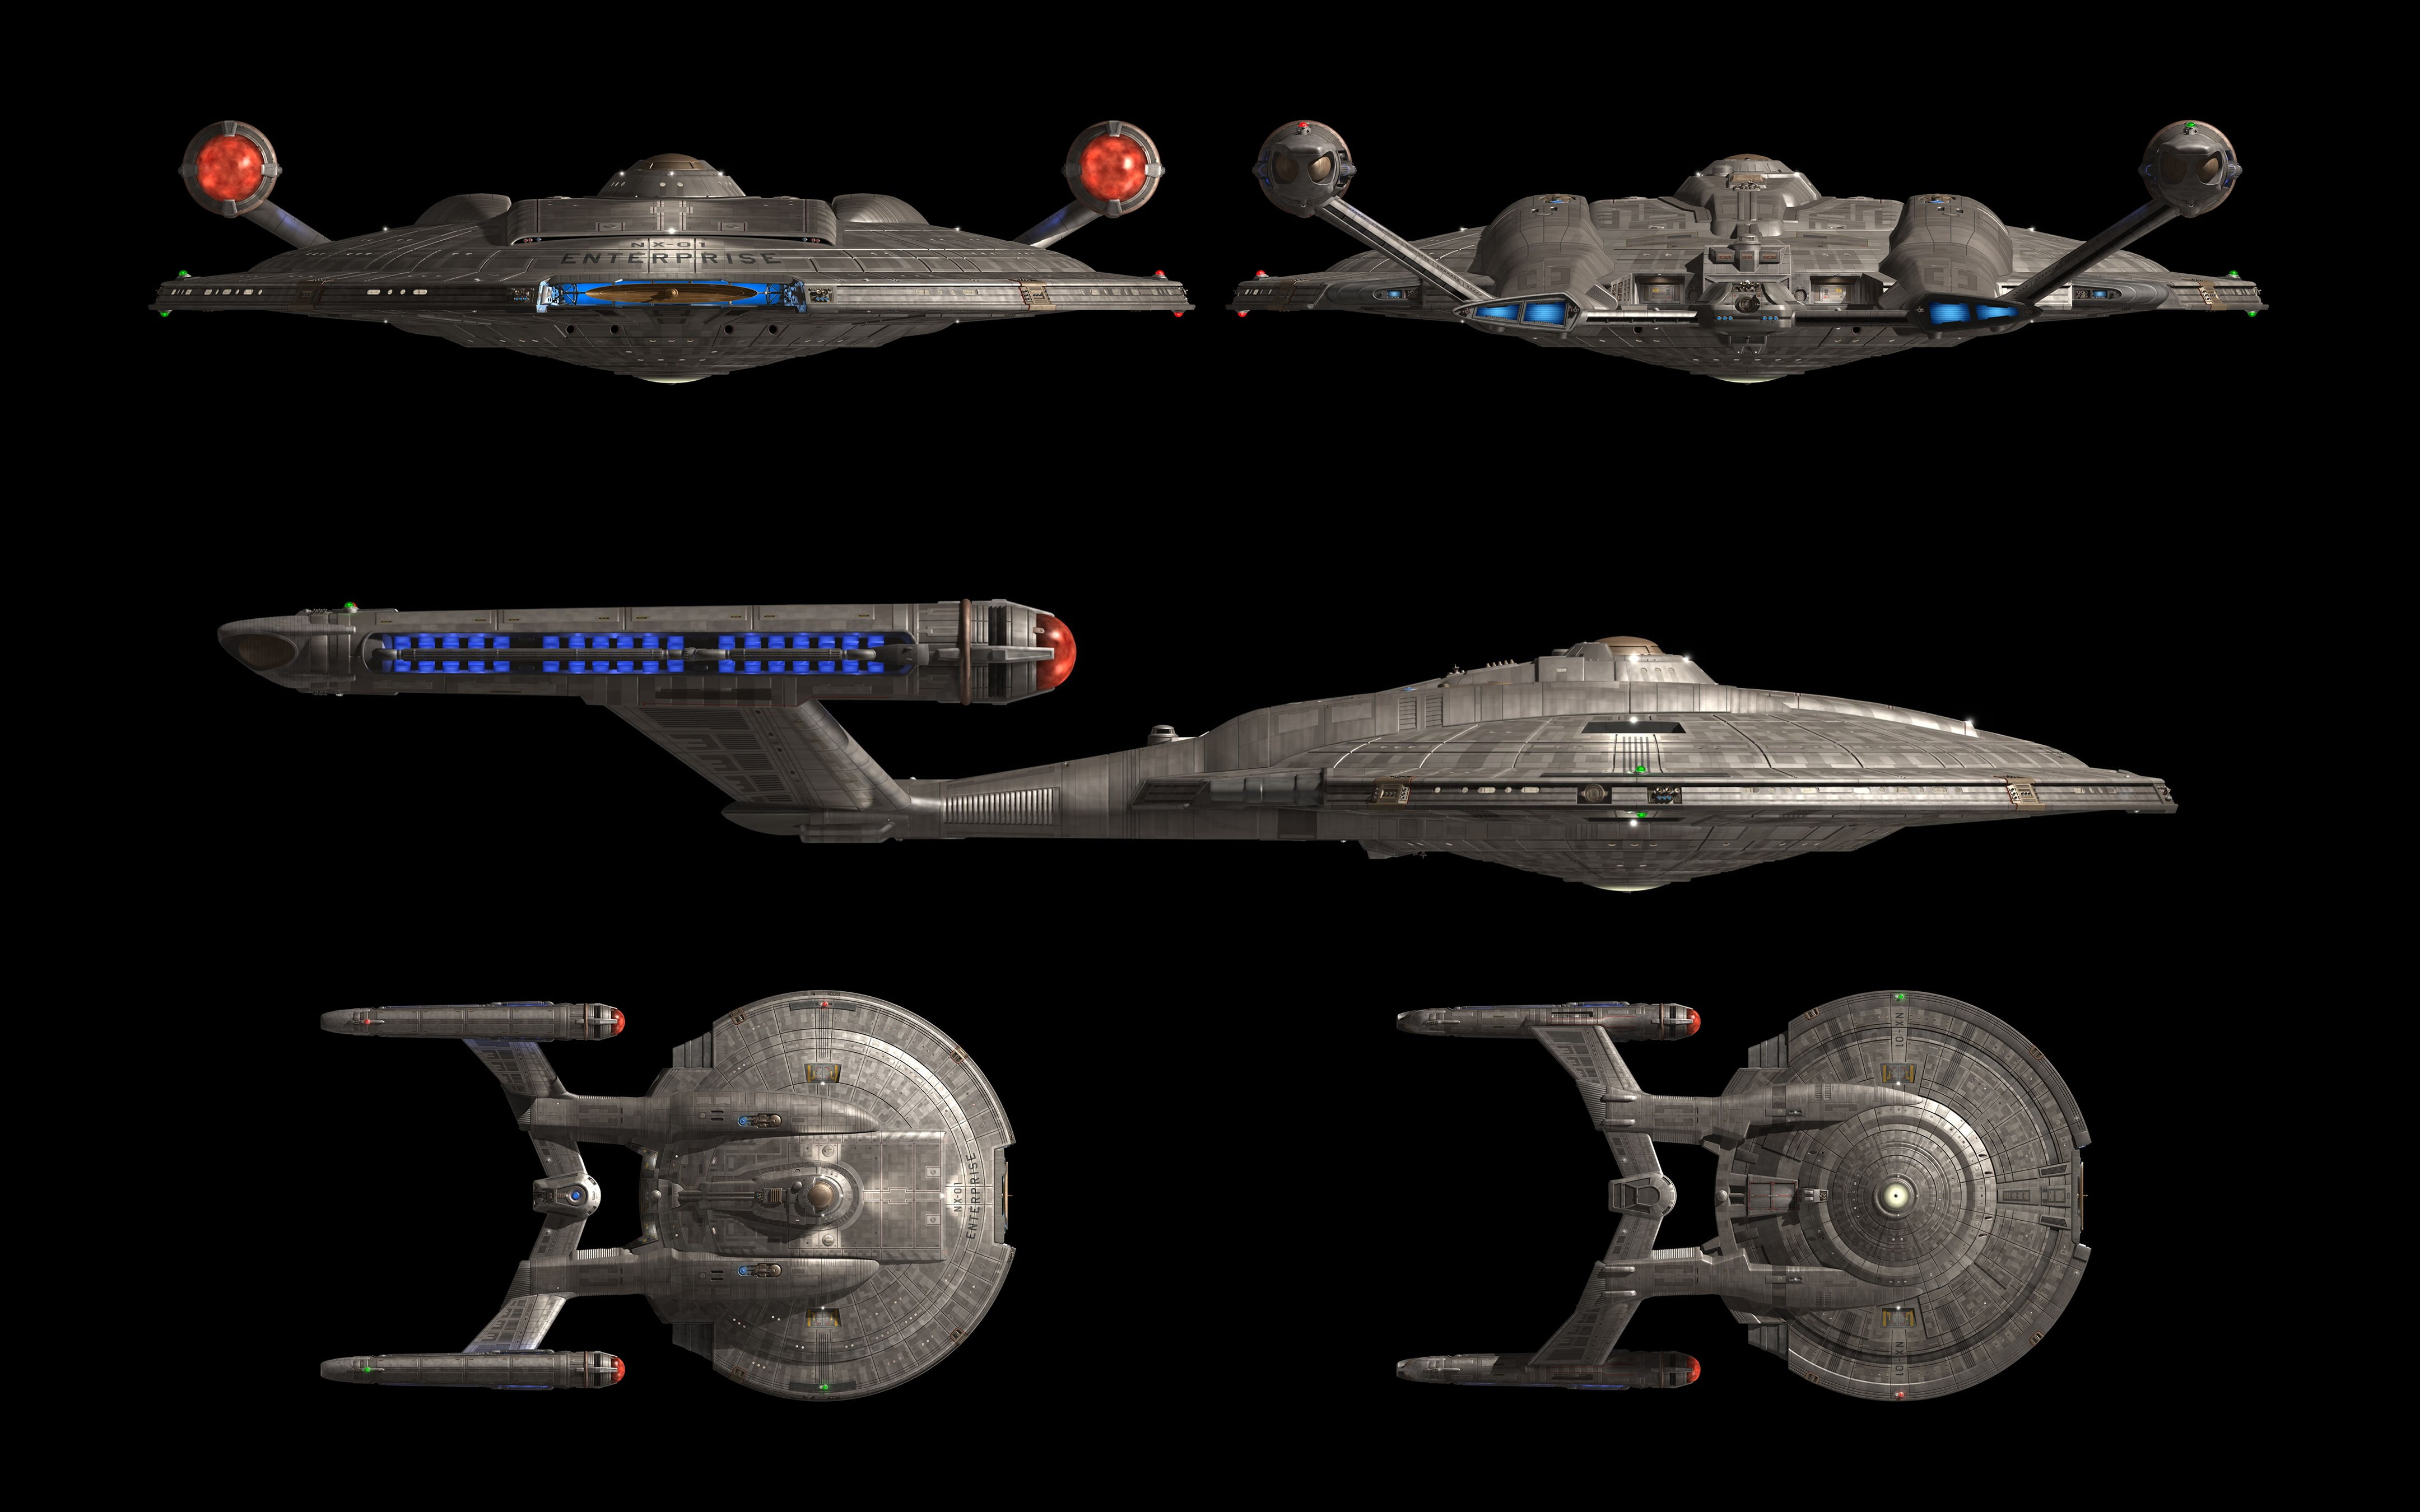 Six Grey Aircrafts Collage Star Trek Uss Enterprise Spaceship Images, Photos, Reviews